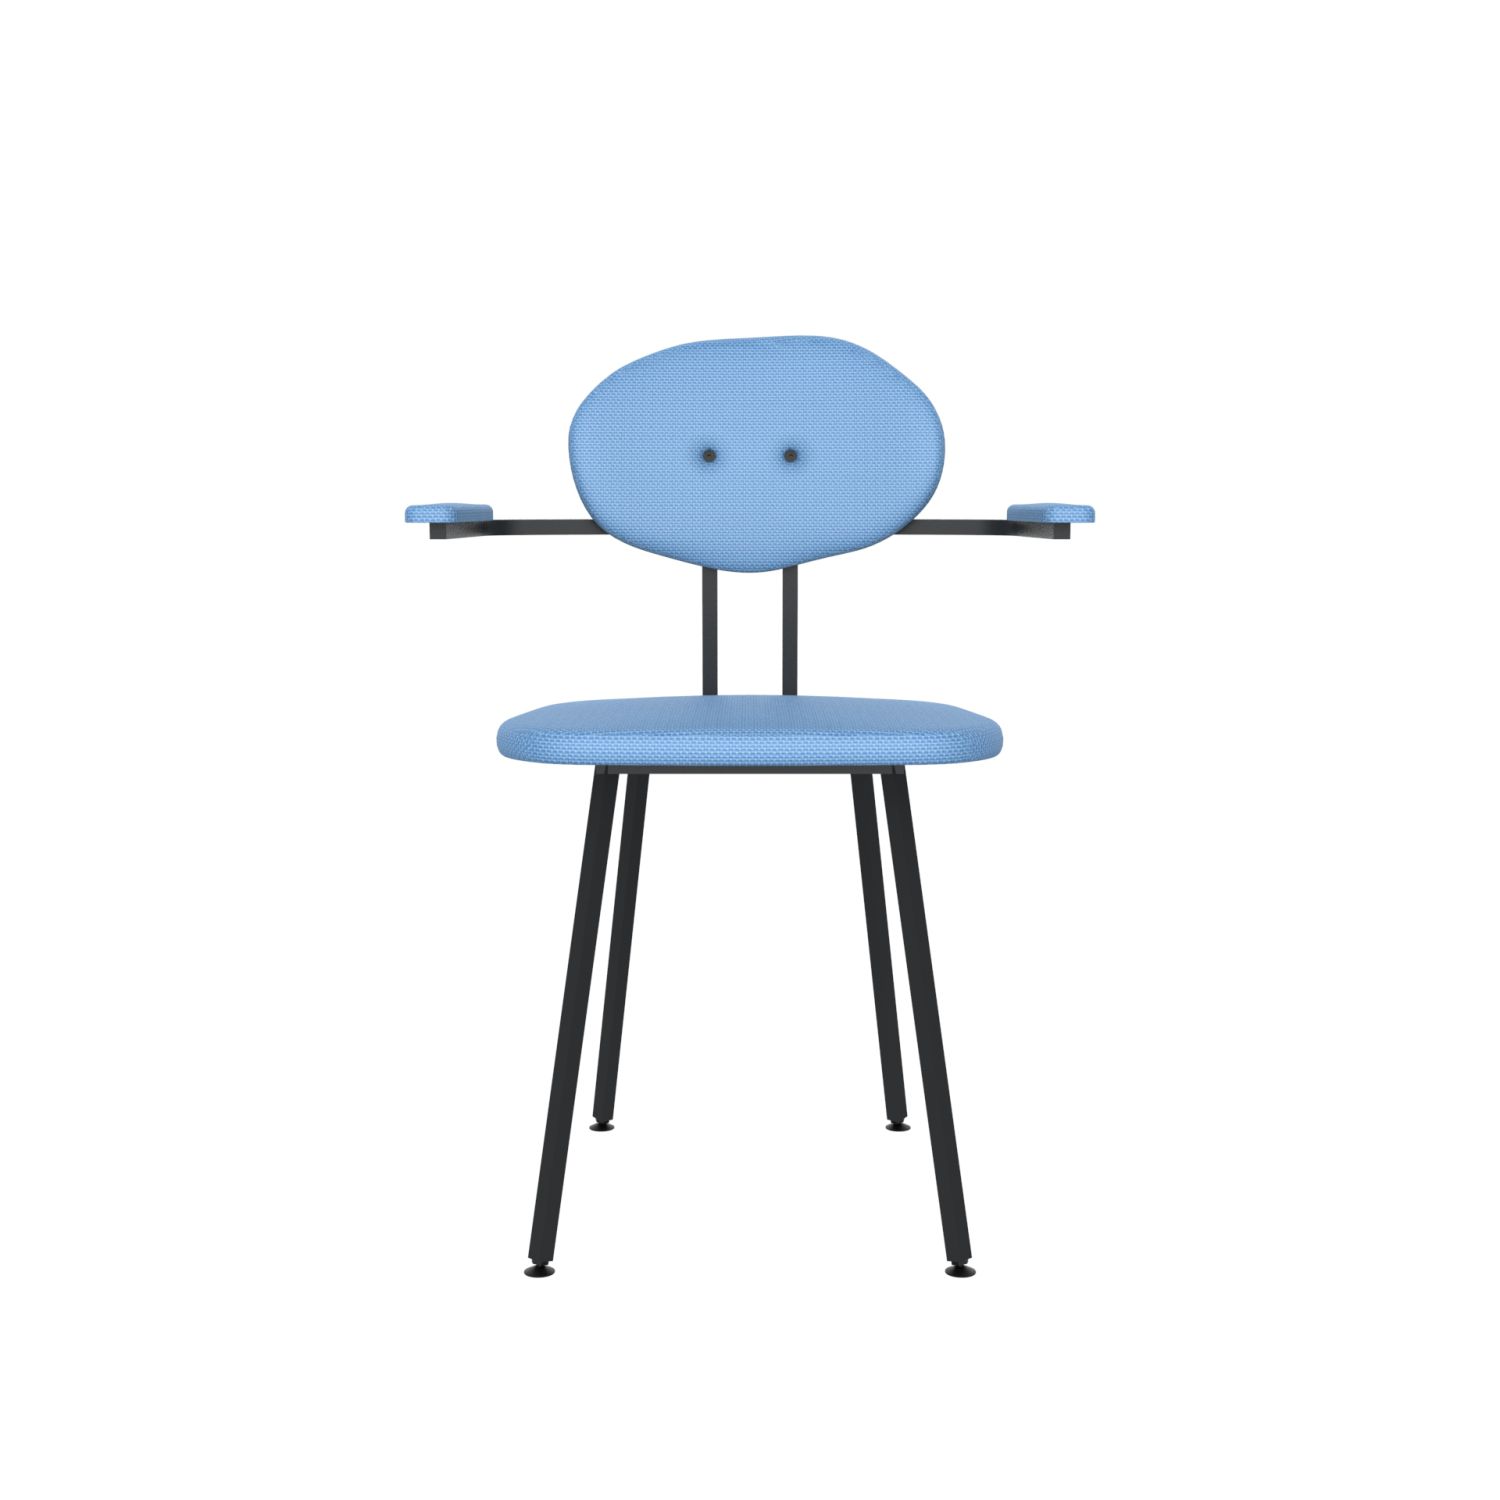 lensvelt maarten baas chair 102 not stackable with armrests backrest d blue horizon 040 black ral9005 hard leg ends